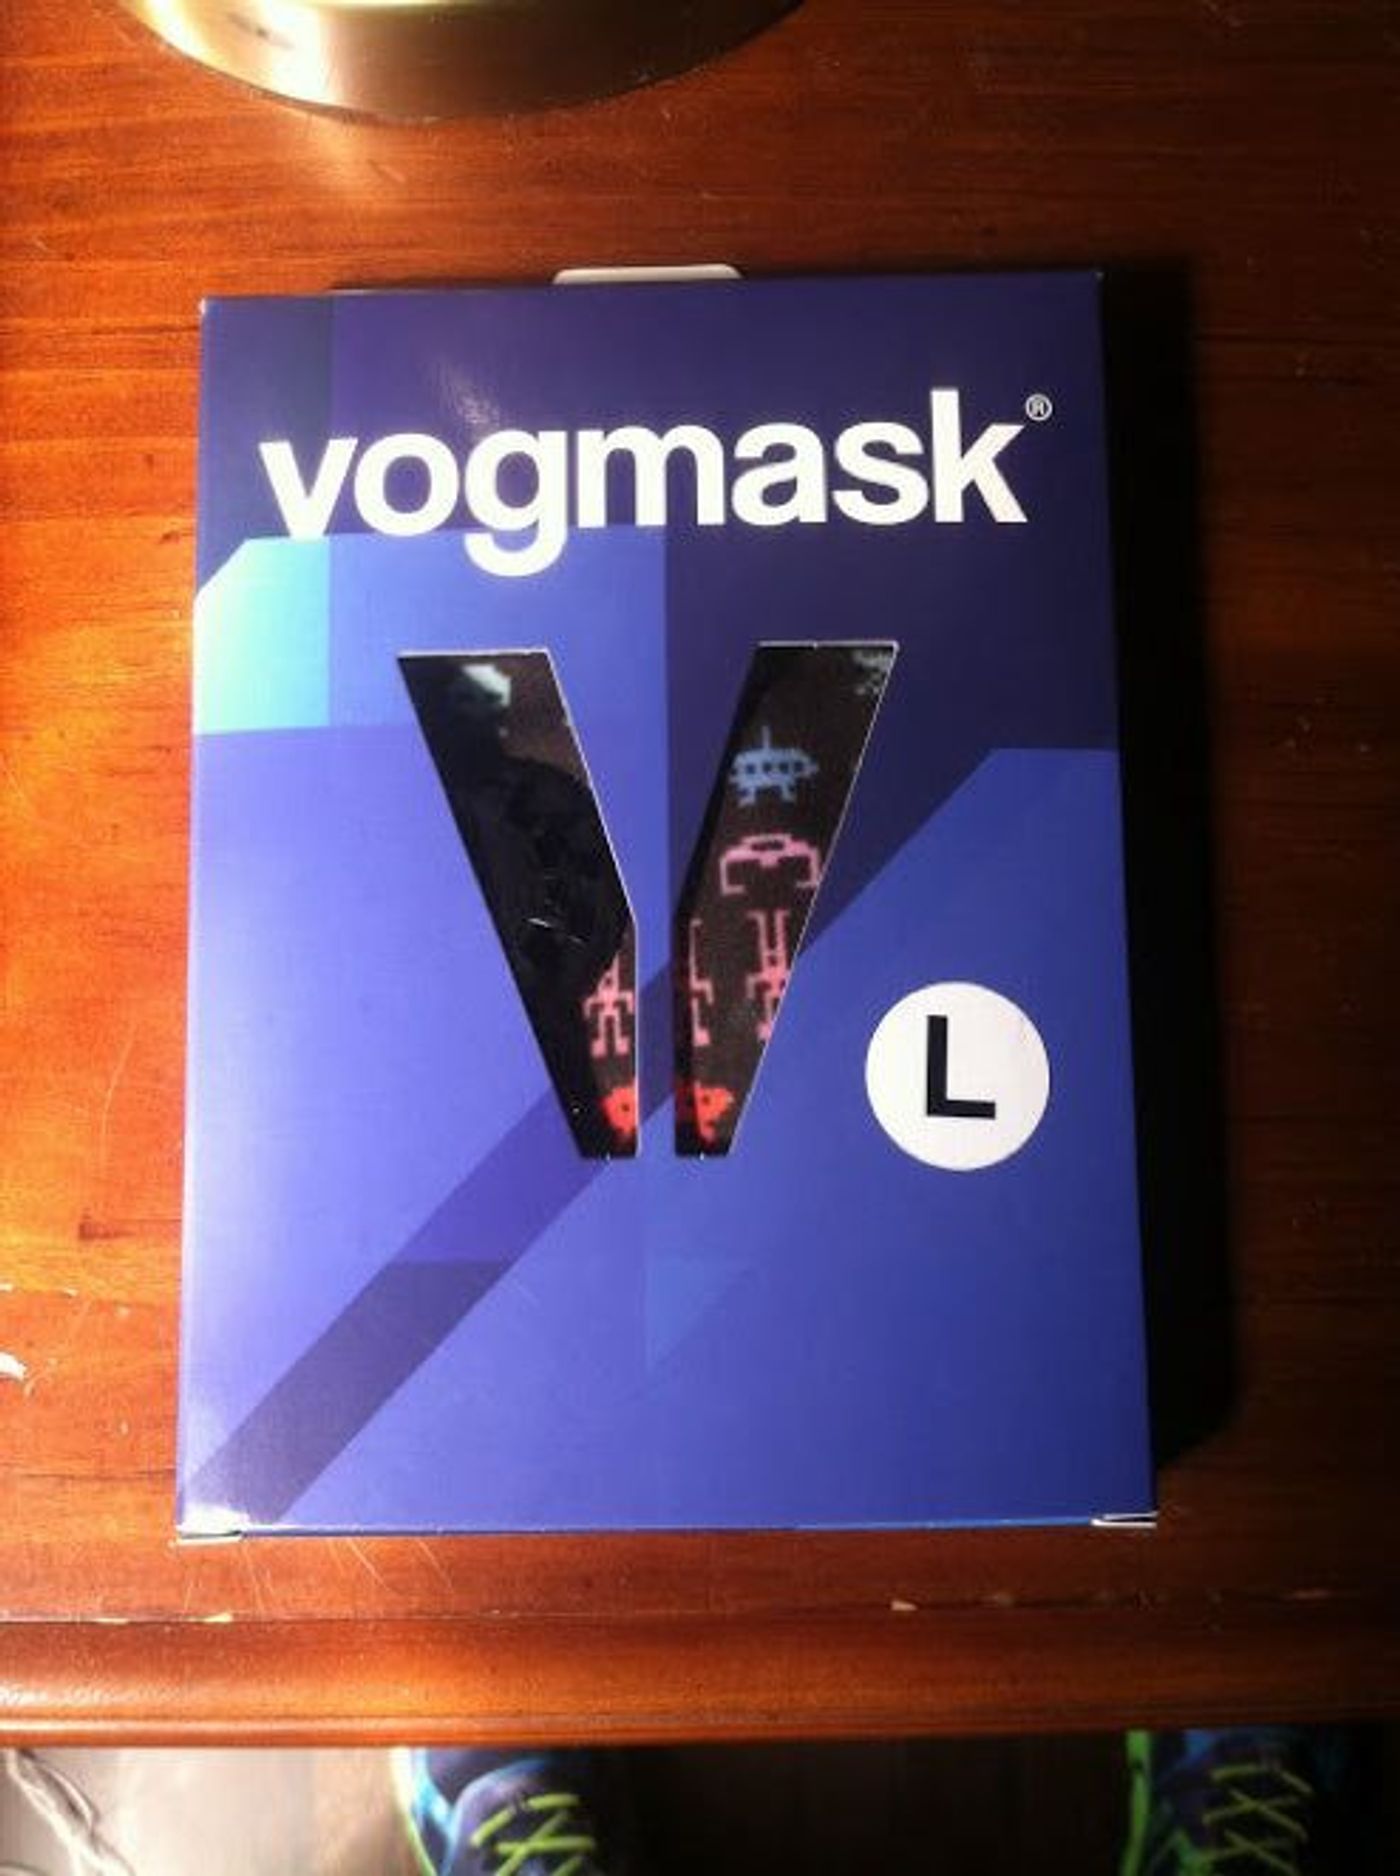 Skyrimrunner Vogmask Review by Bill Richburg Press